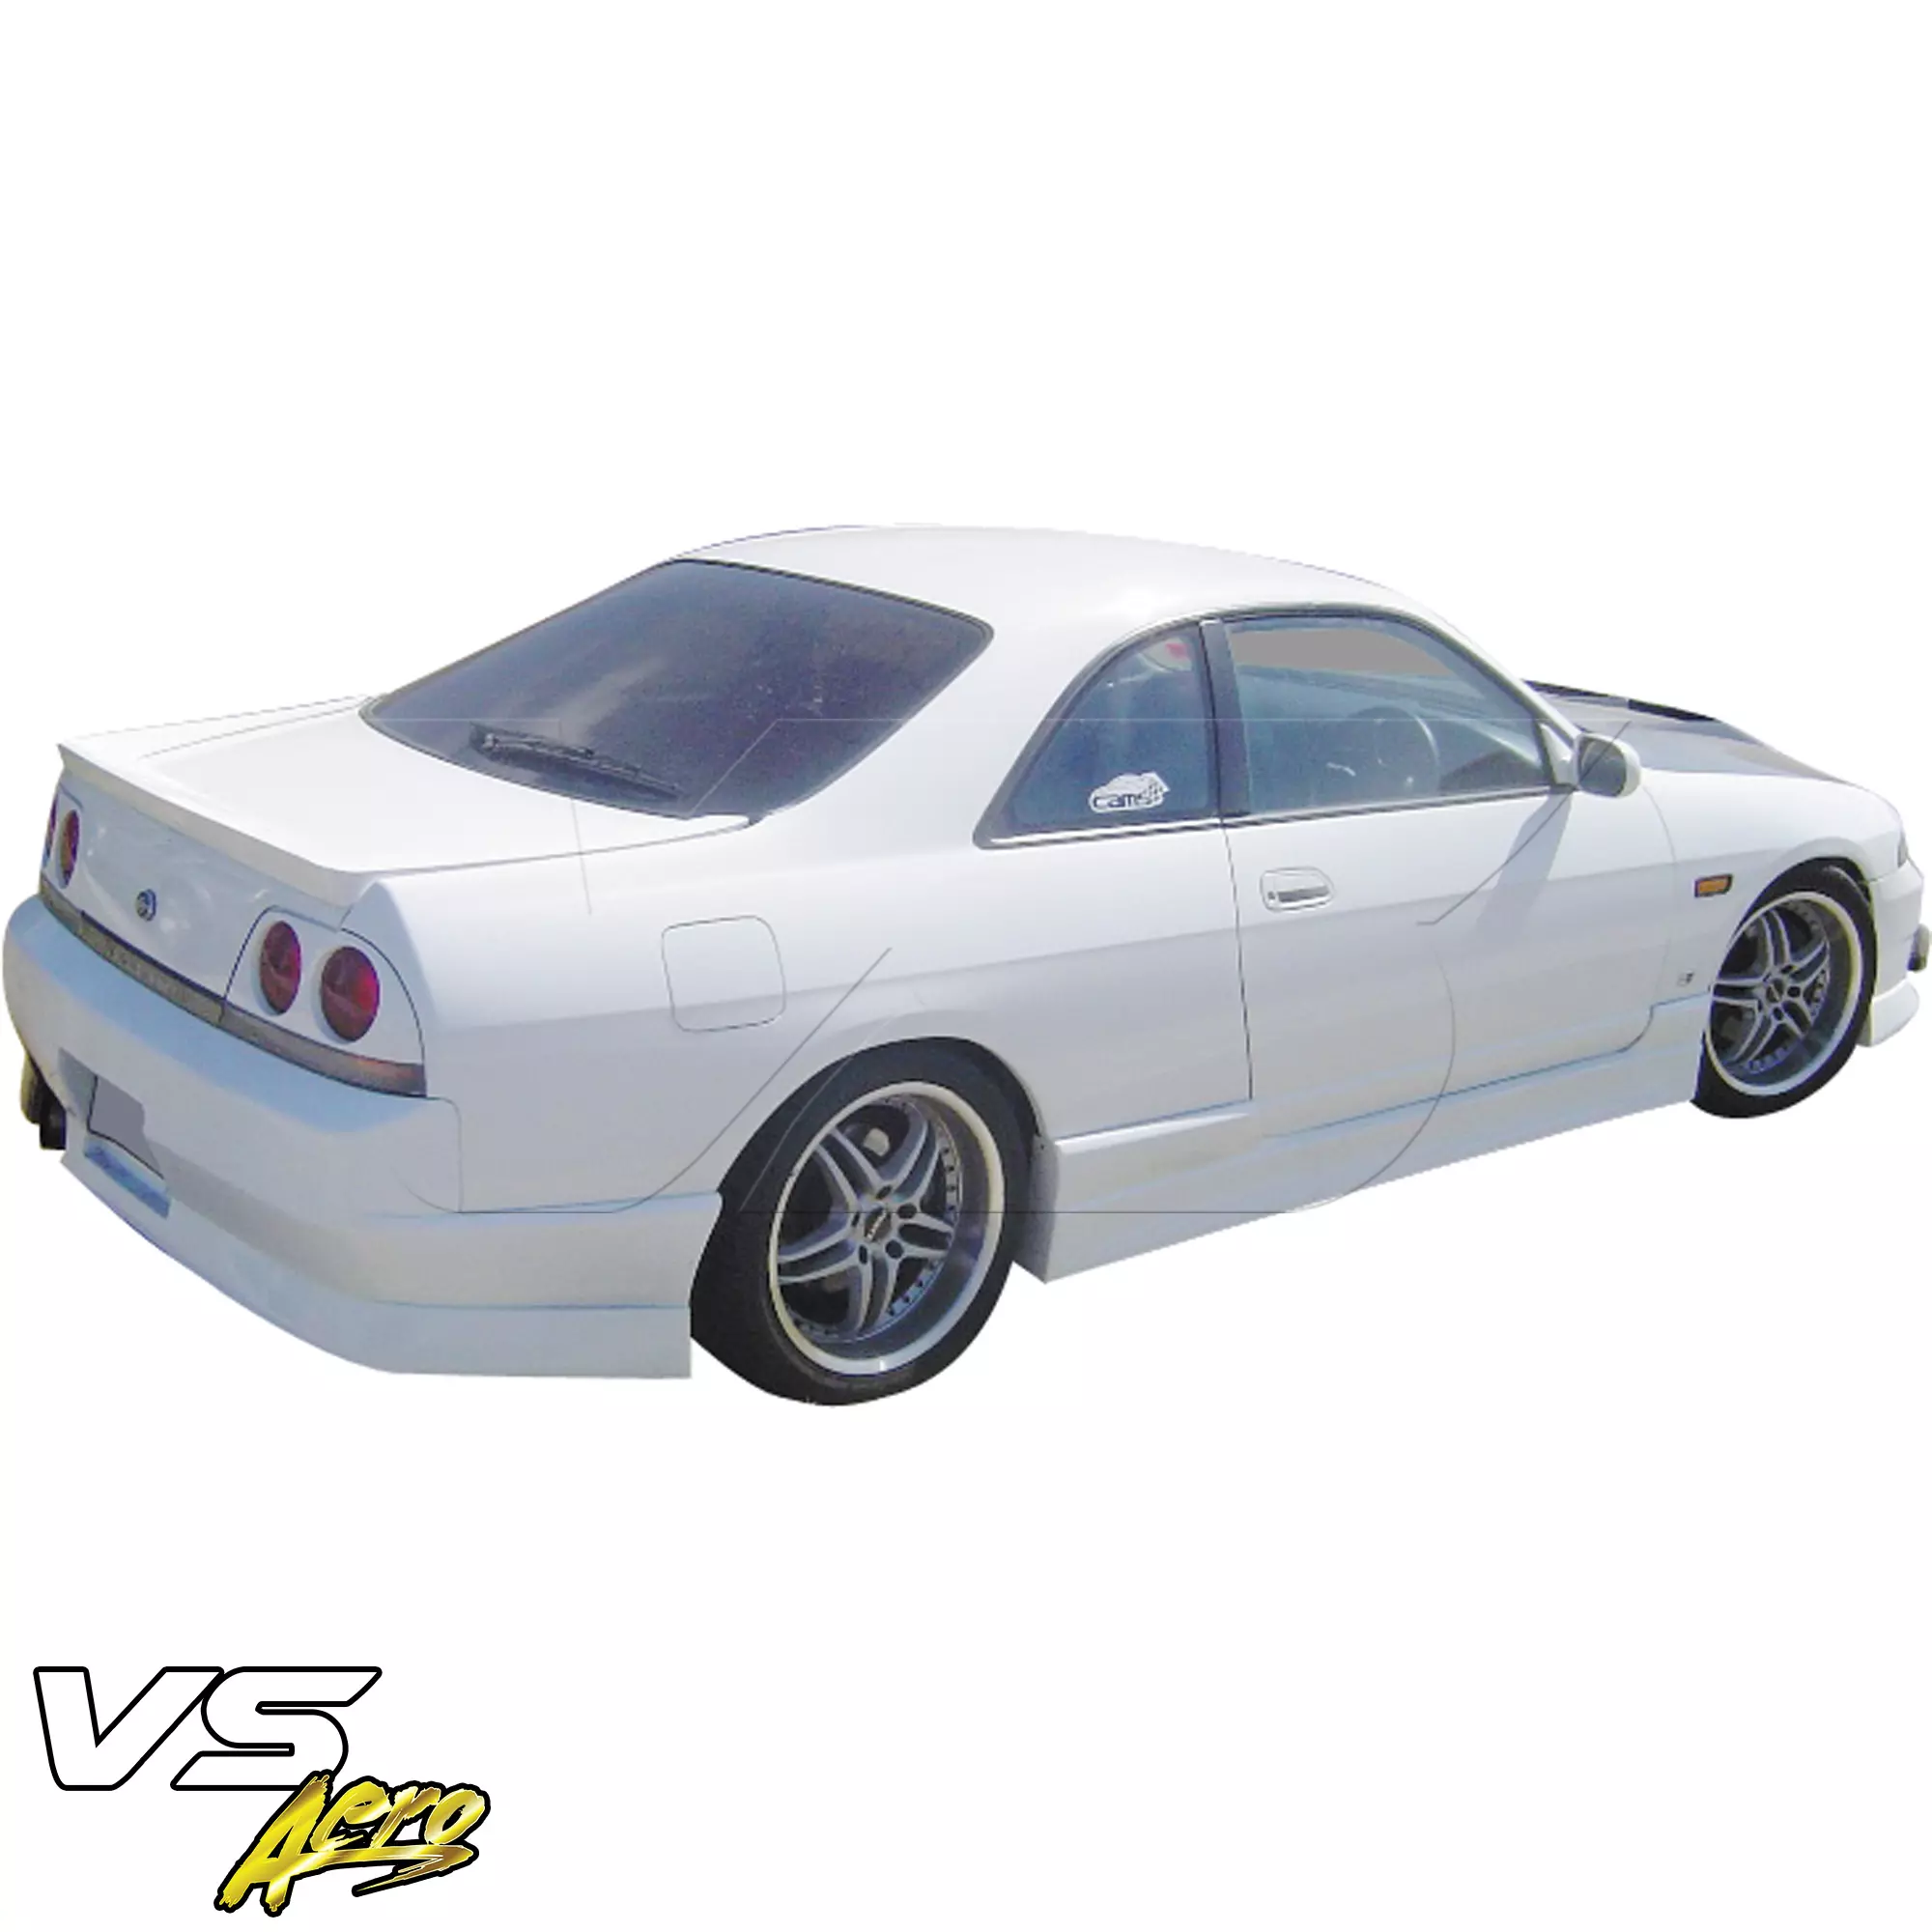 VSaero FRP MSPO v2 Body Kit 4pc > Nissan Skyline R33 GTS 1995-1998 > 2dr Coupe - Image 35